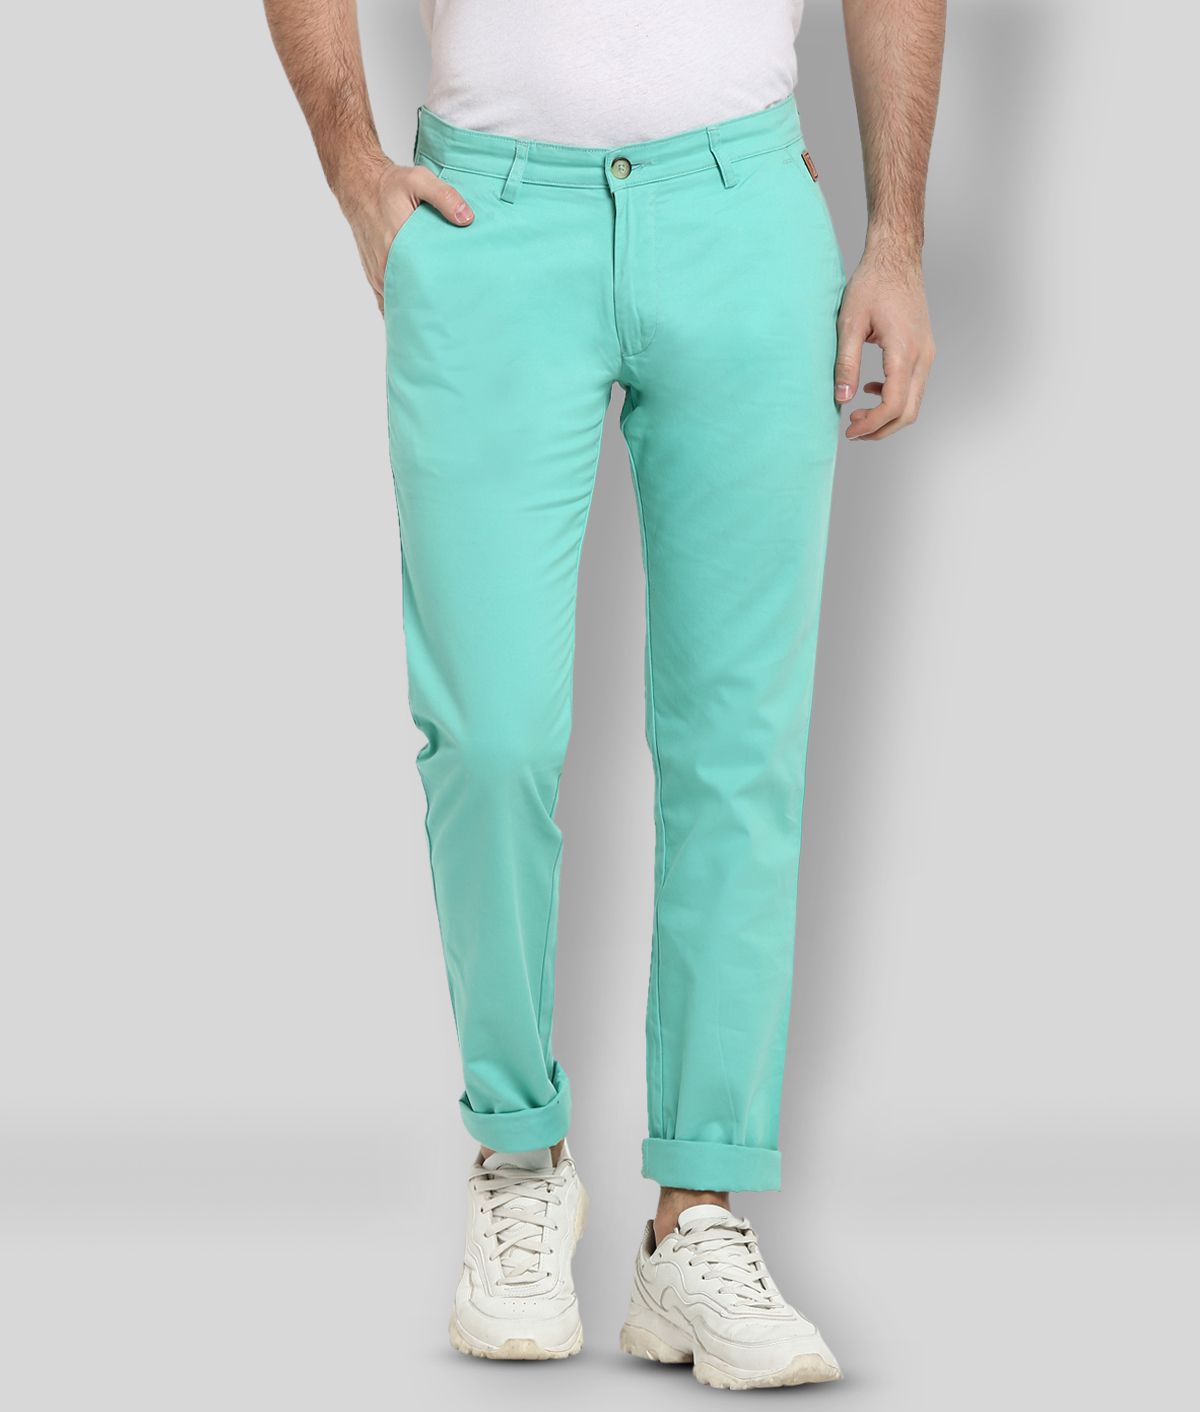     			Urbano Fashion - Green Cotton Slim Fit Men's Chinos (Pack of 1)